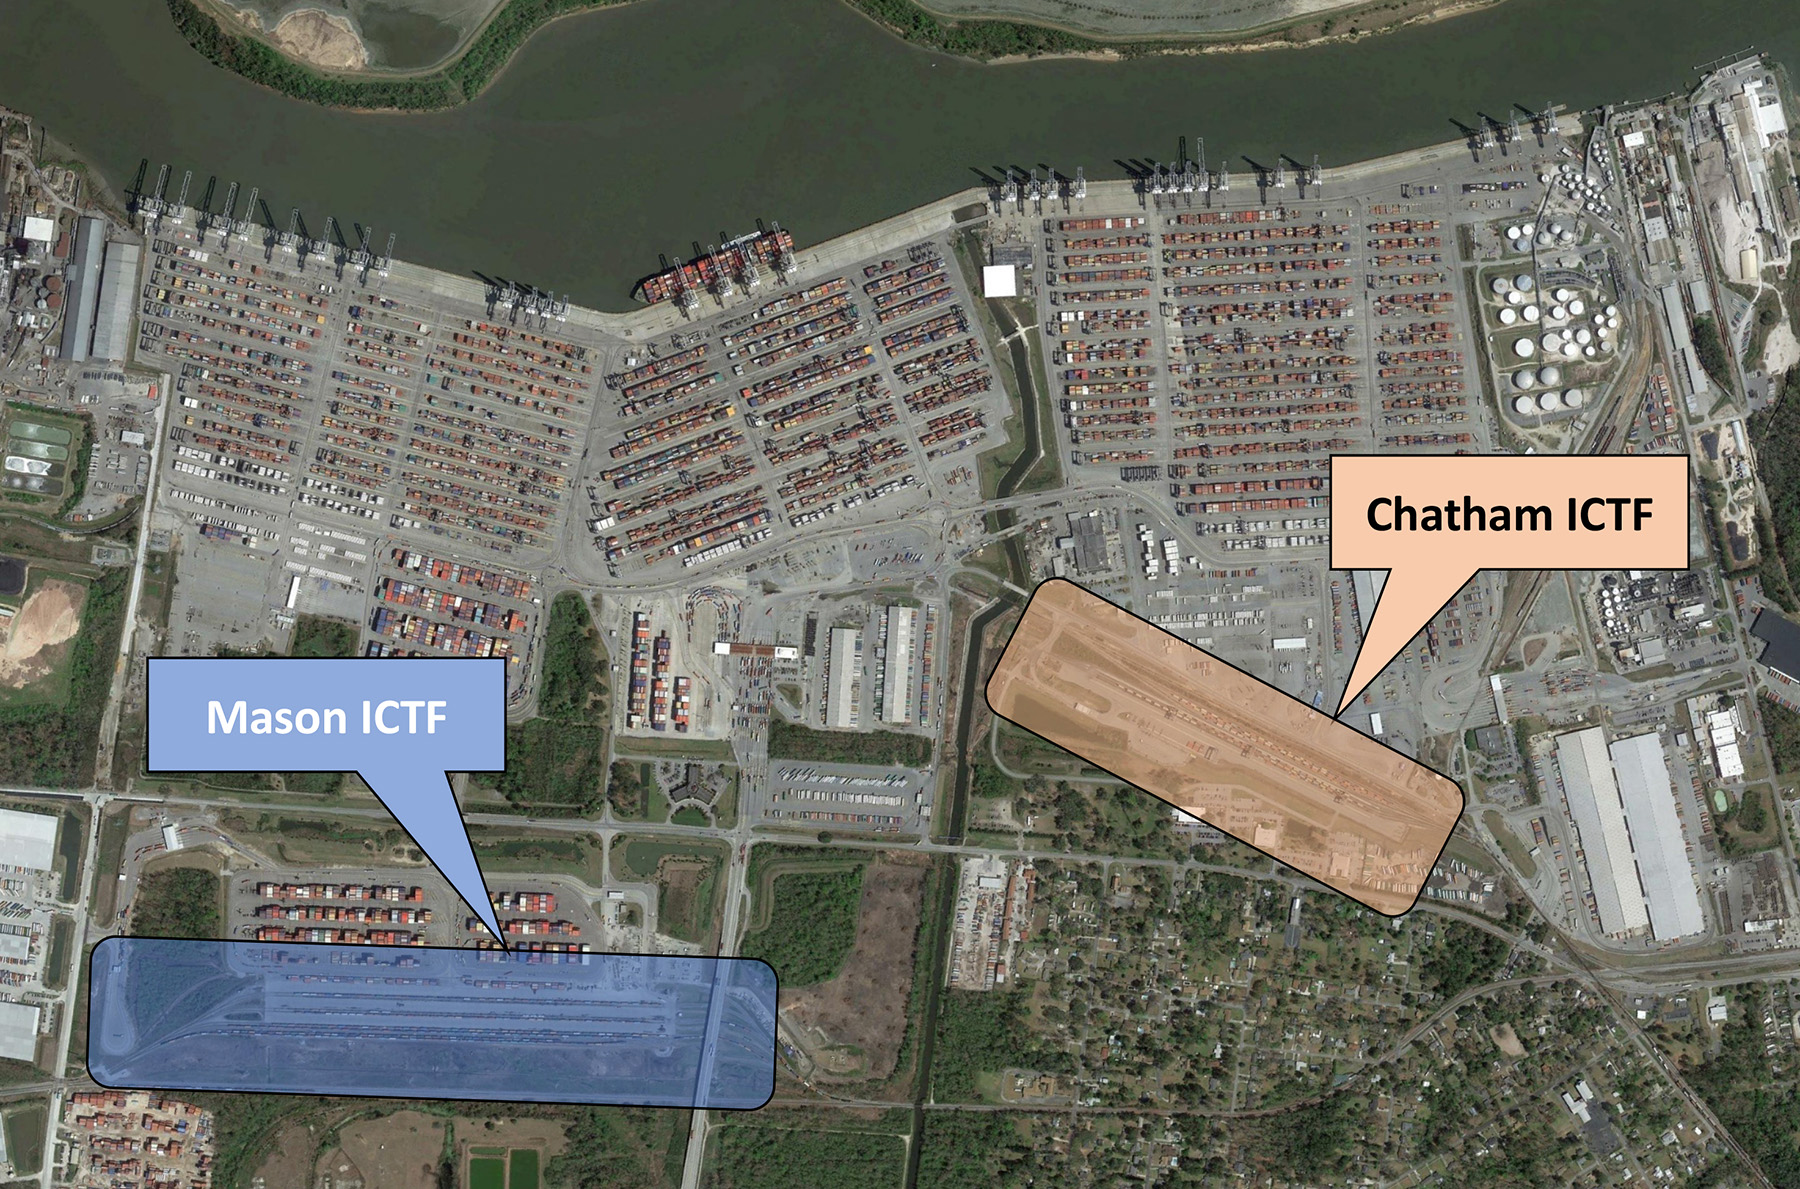 Google image of a shipping yard.